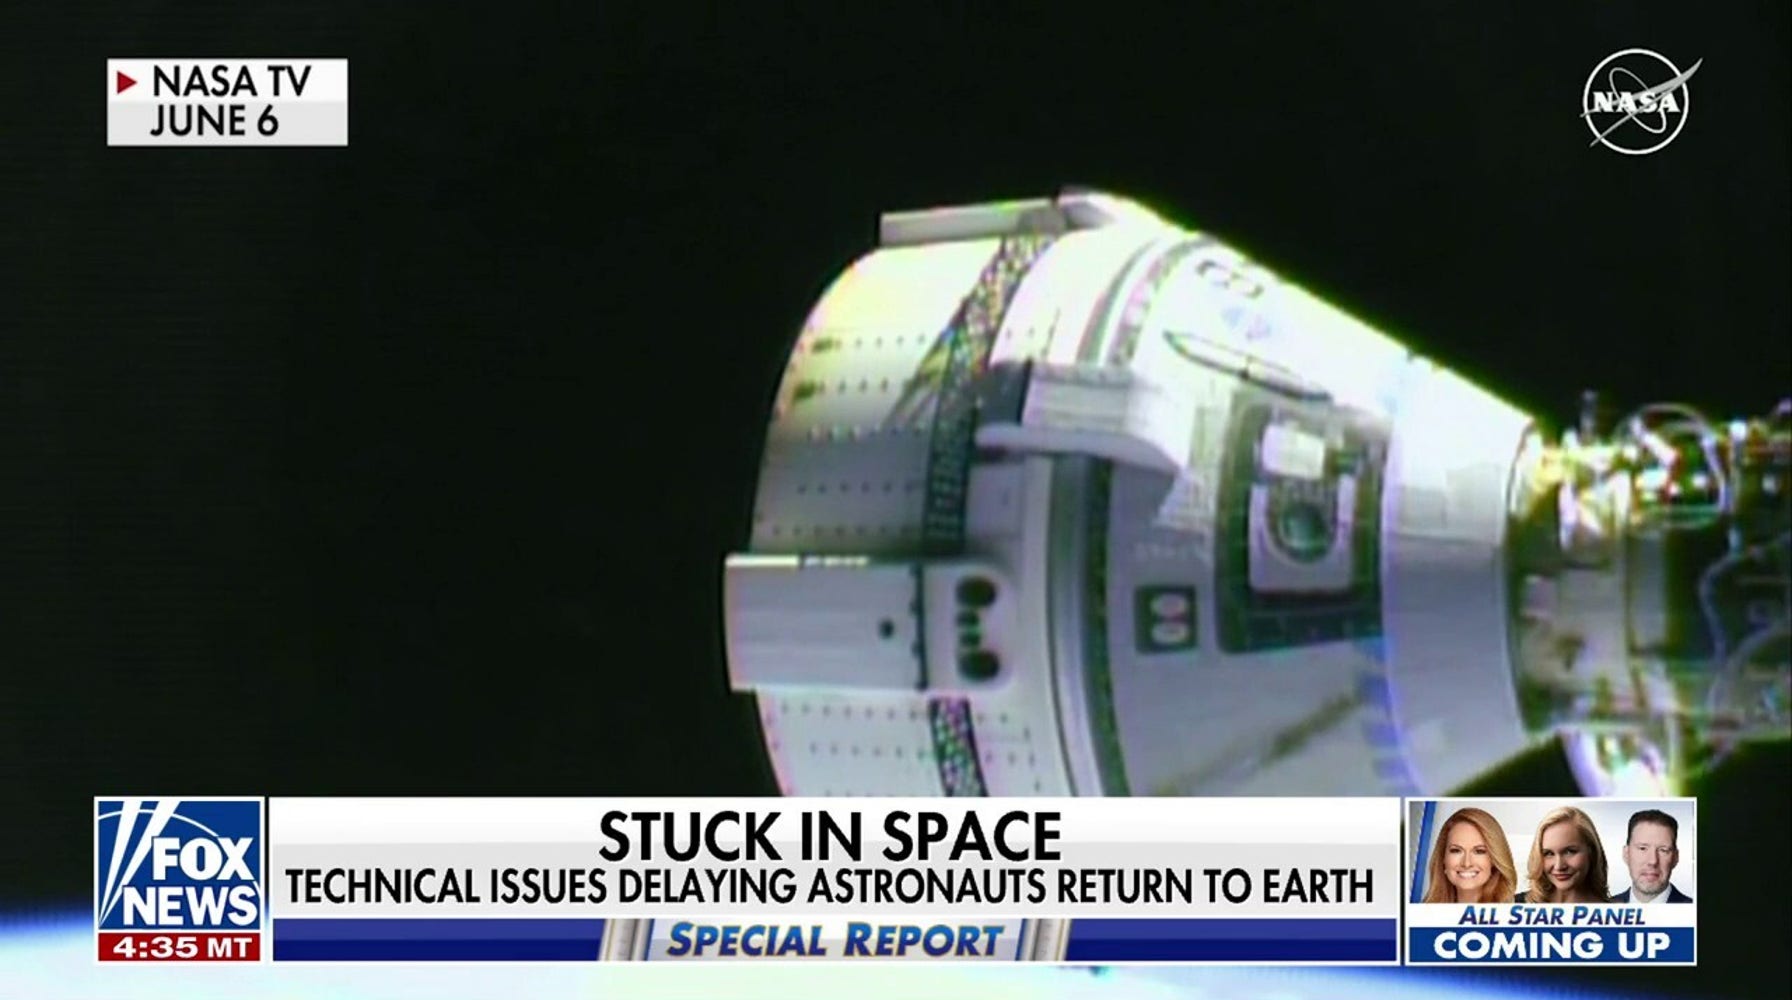 Boeing's Starliner Glitch Delays Astronauts' Return to Earth